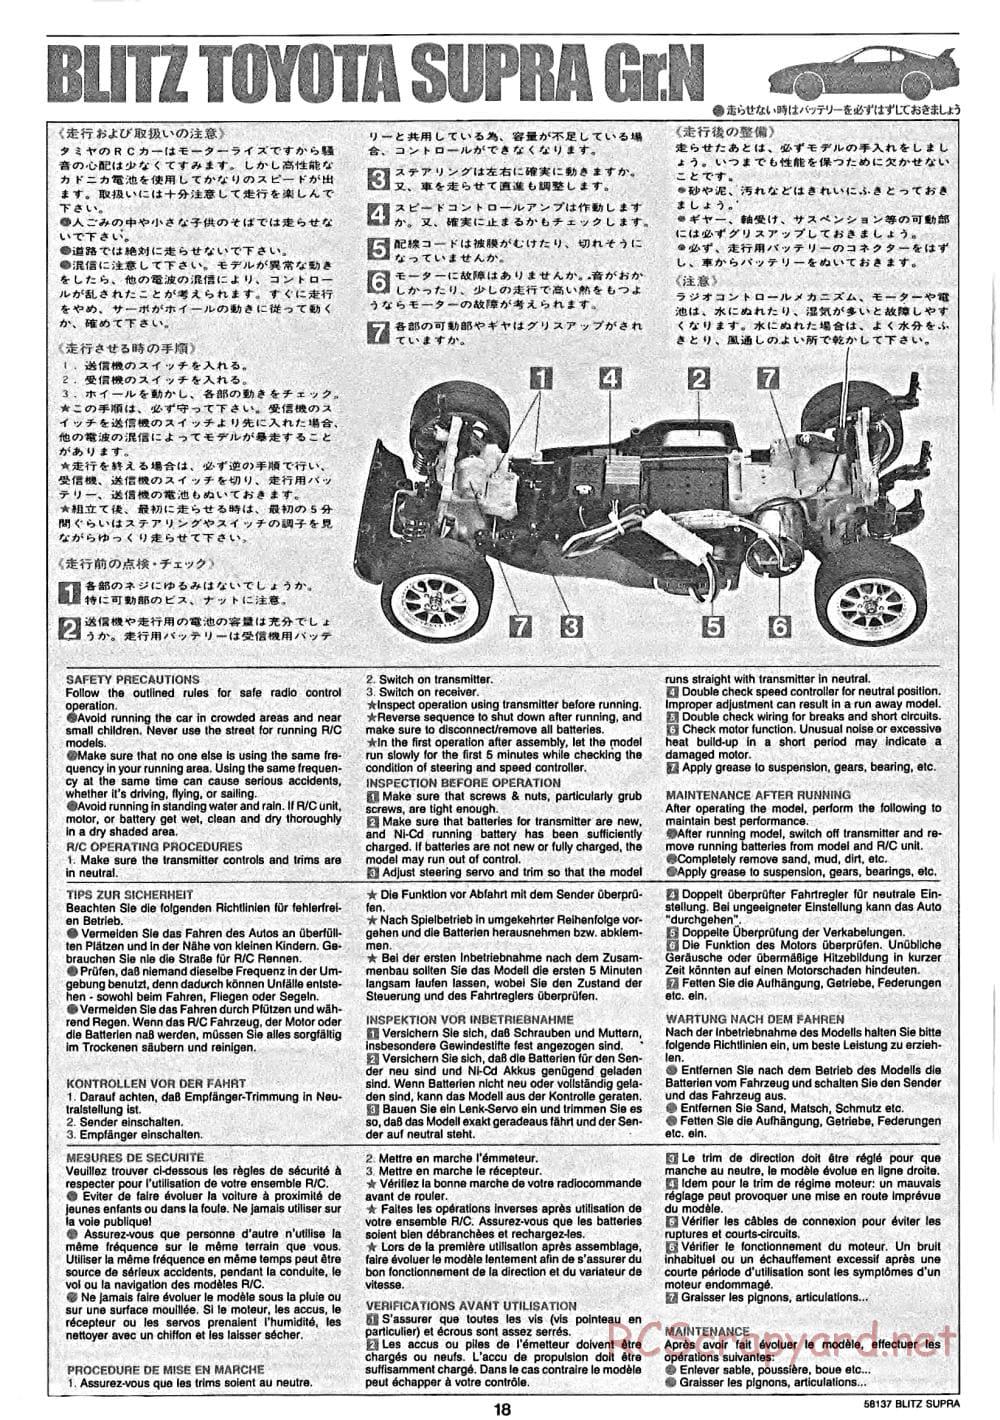 Tamiya - Blitz Toyota Supra Gr.N - TA-02 Chassis - Manual - Page 18